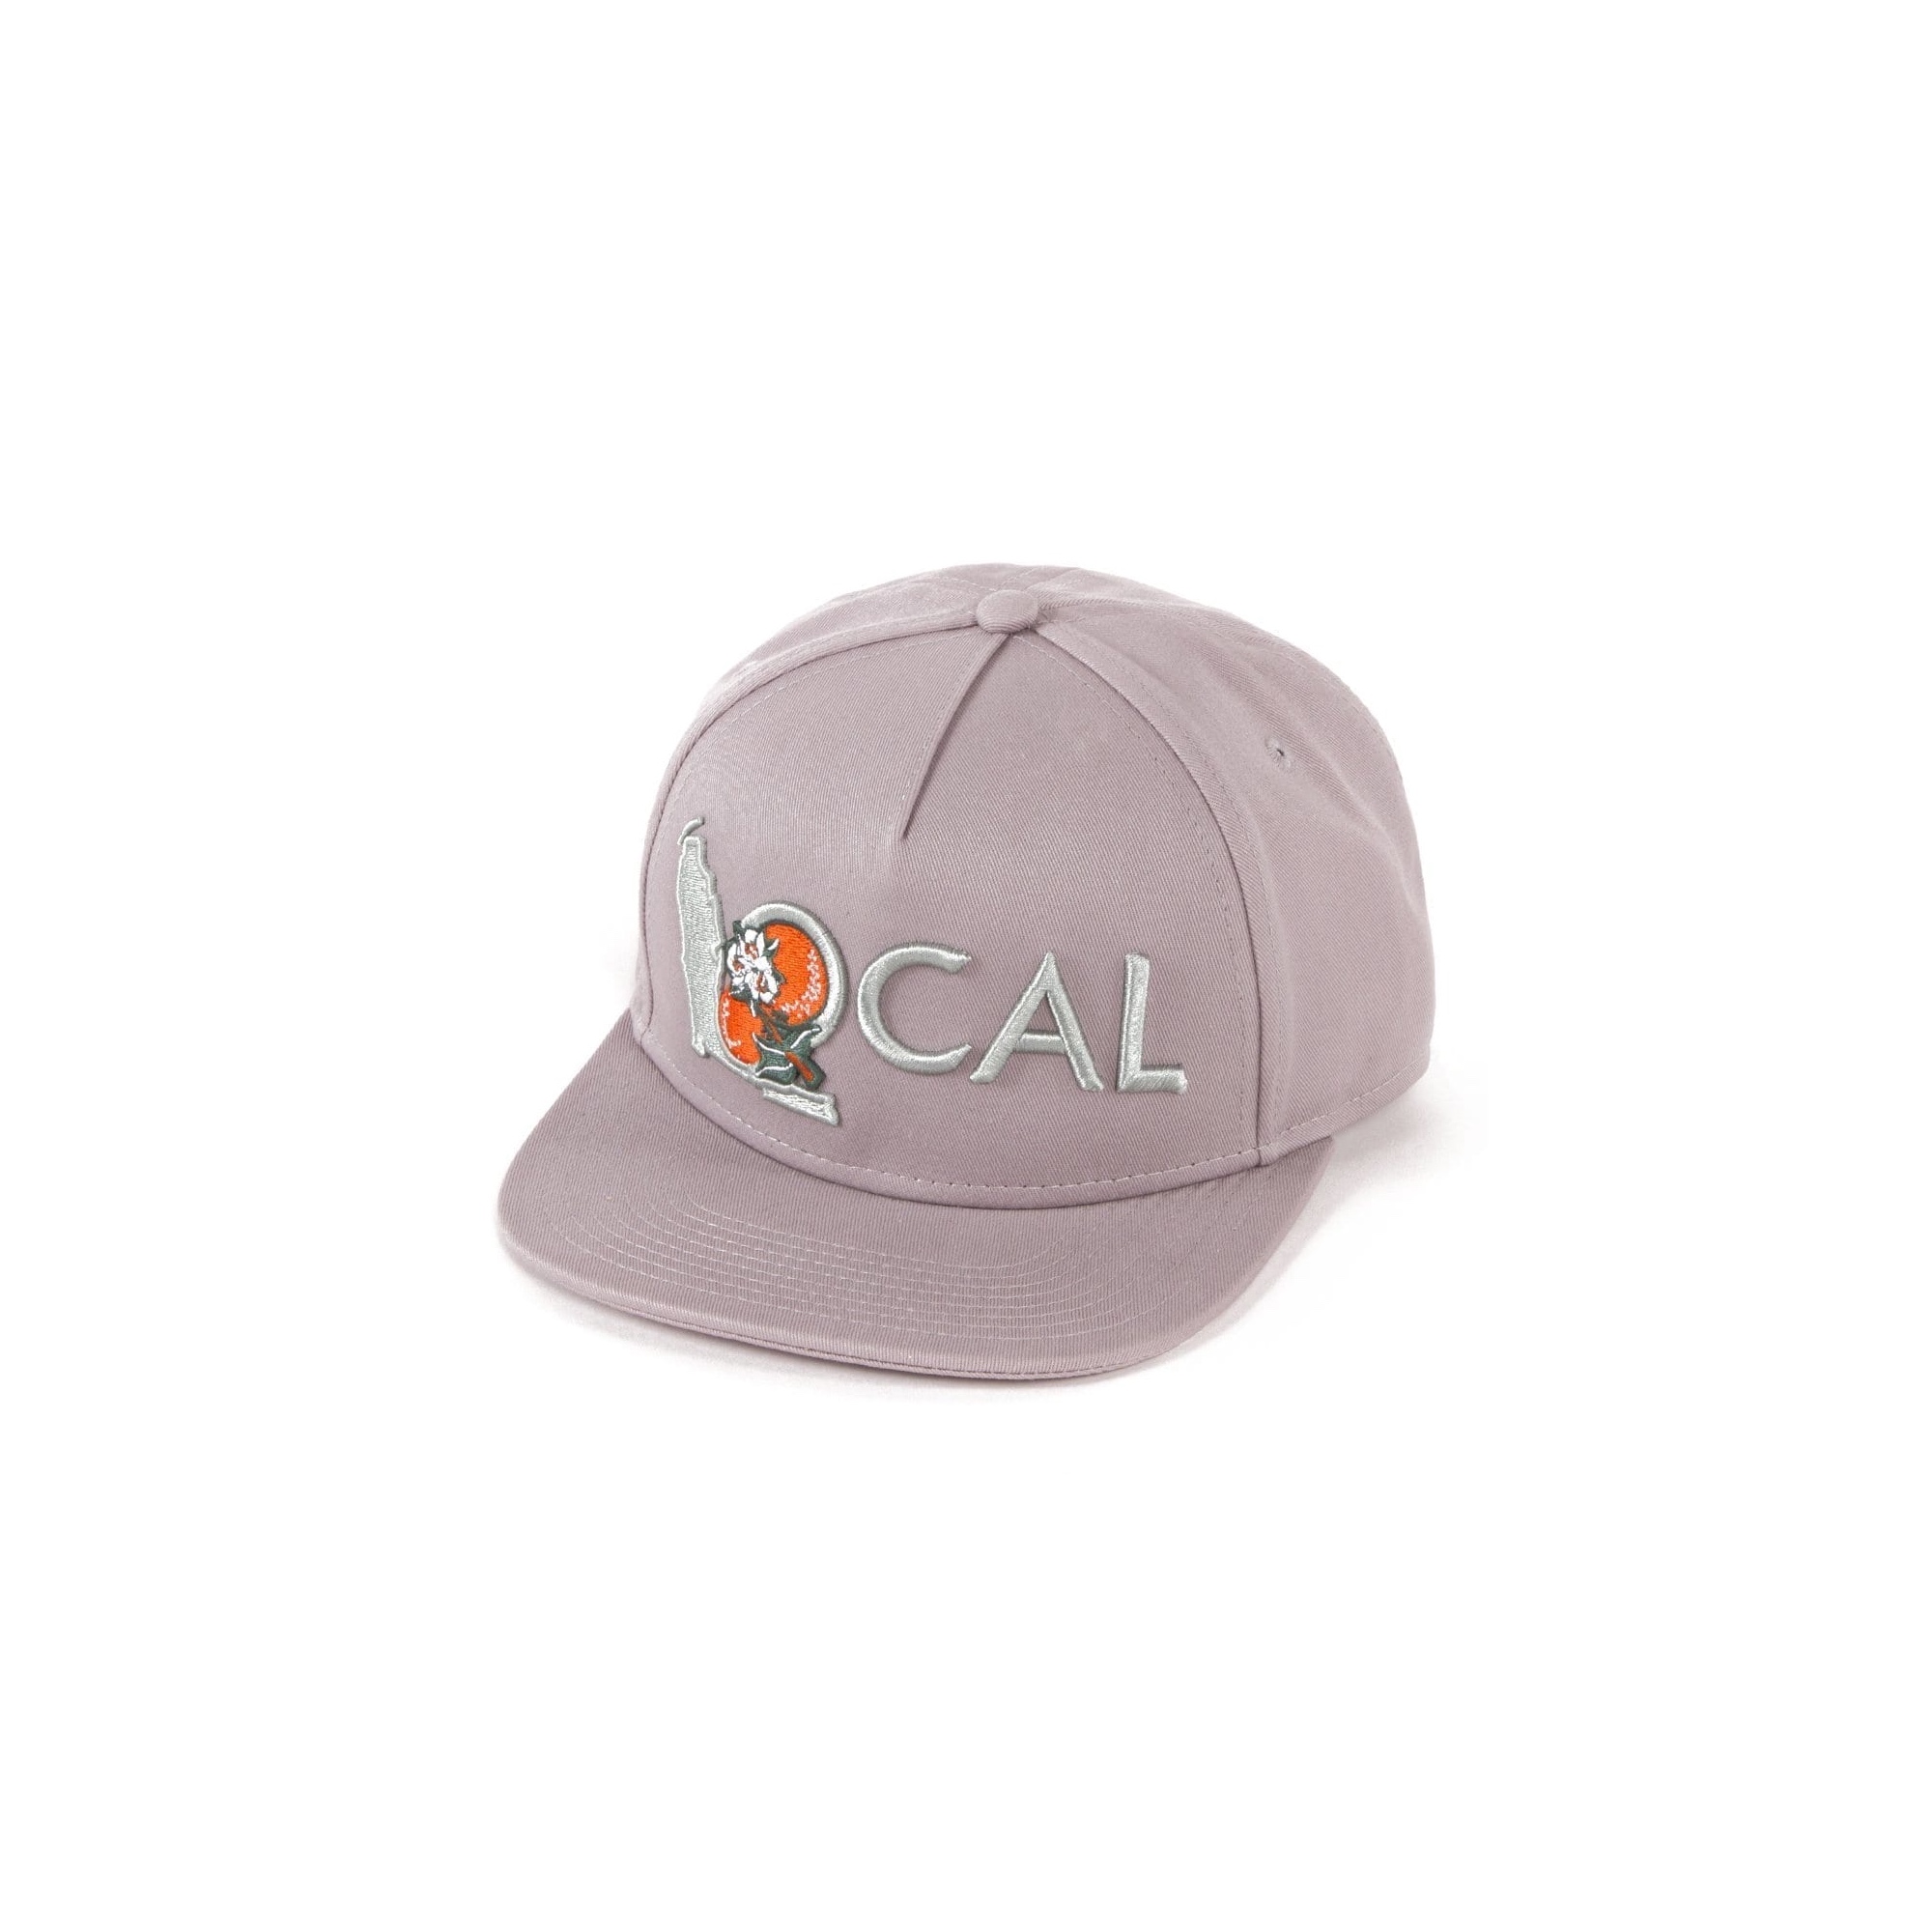 Local hats